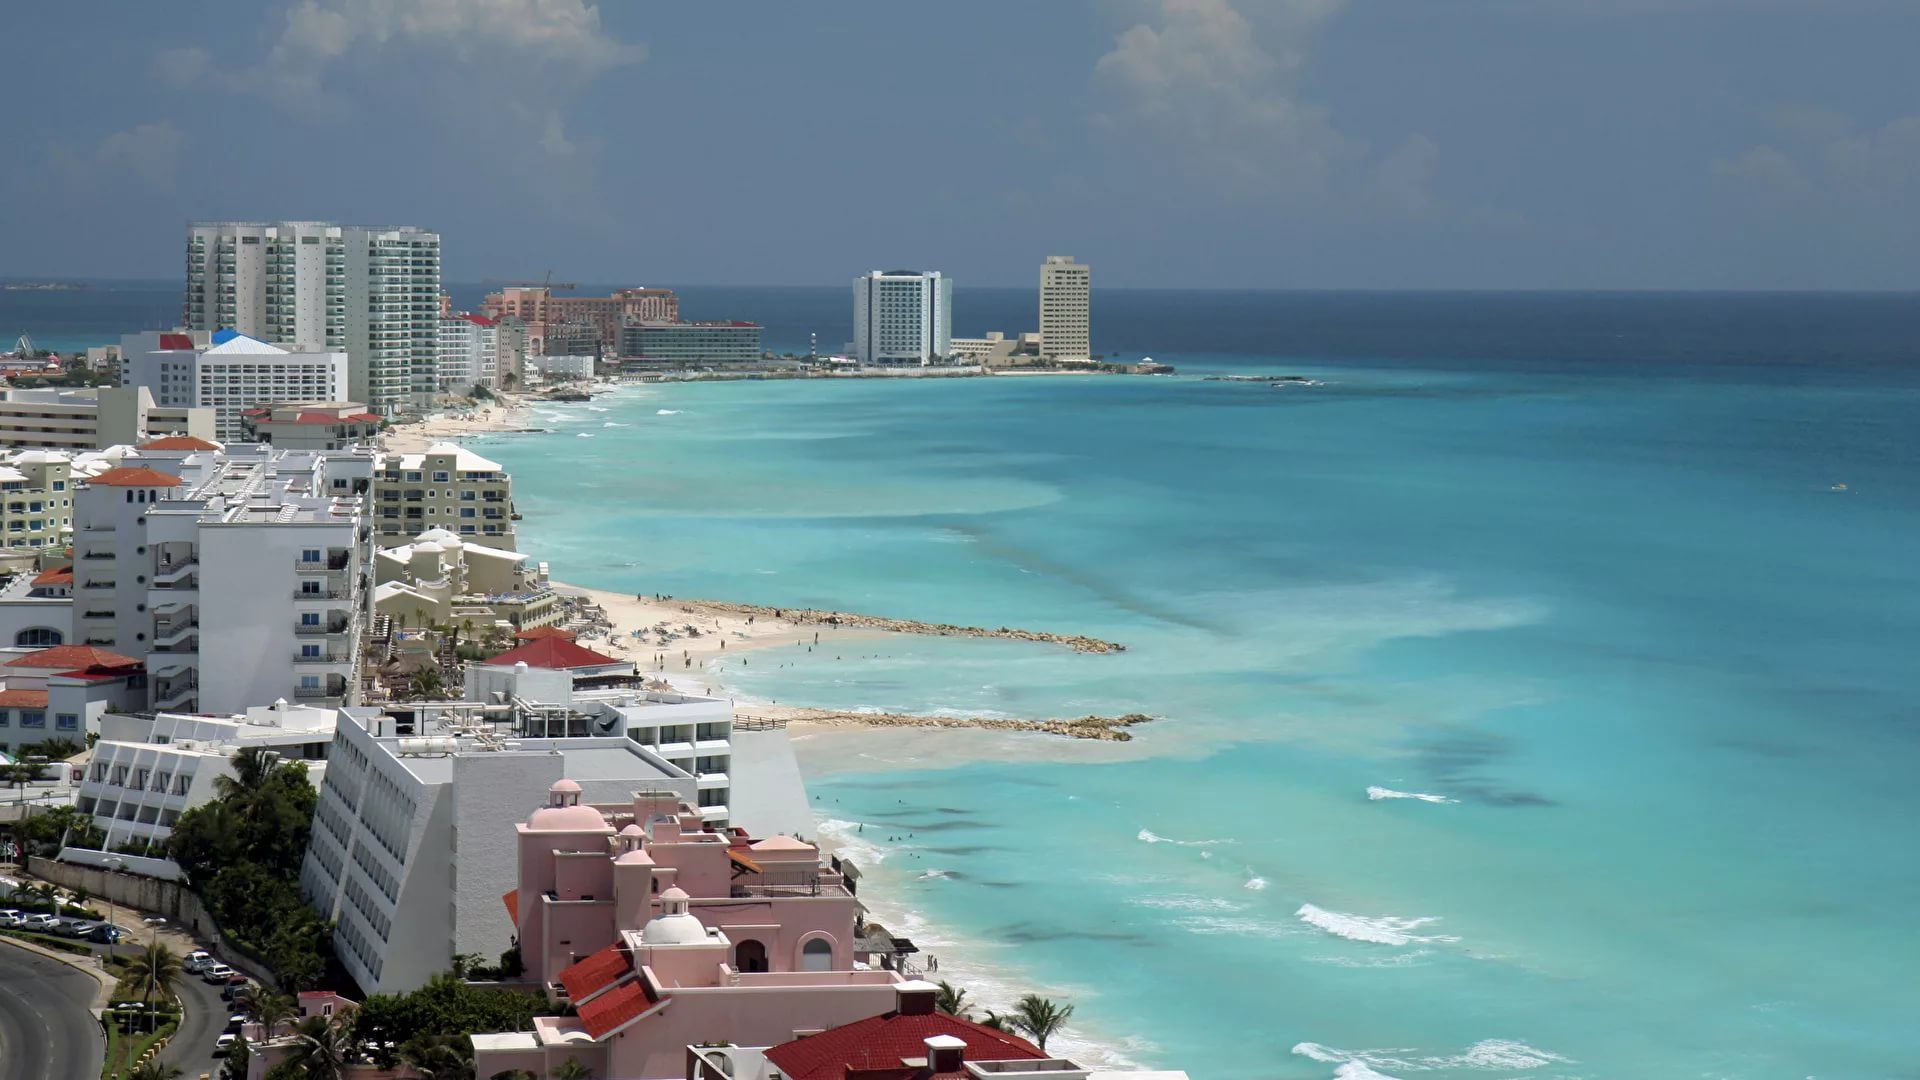 Cancun Mexico Image